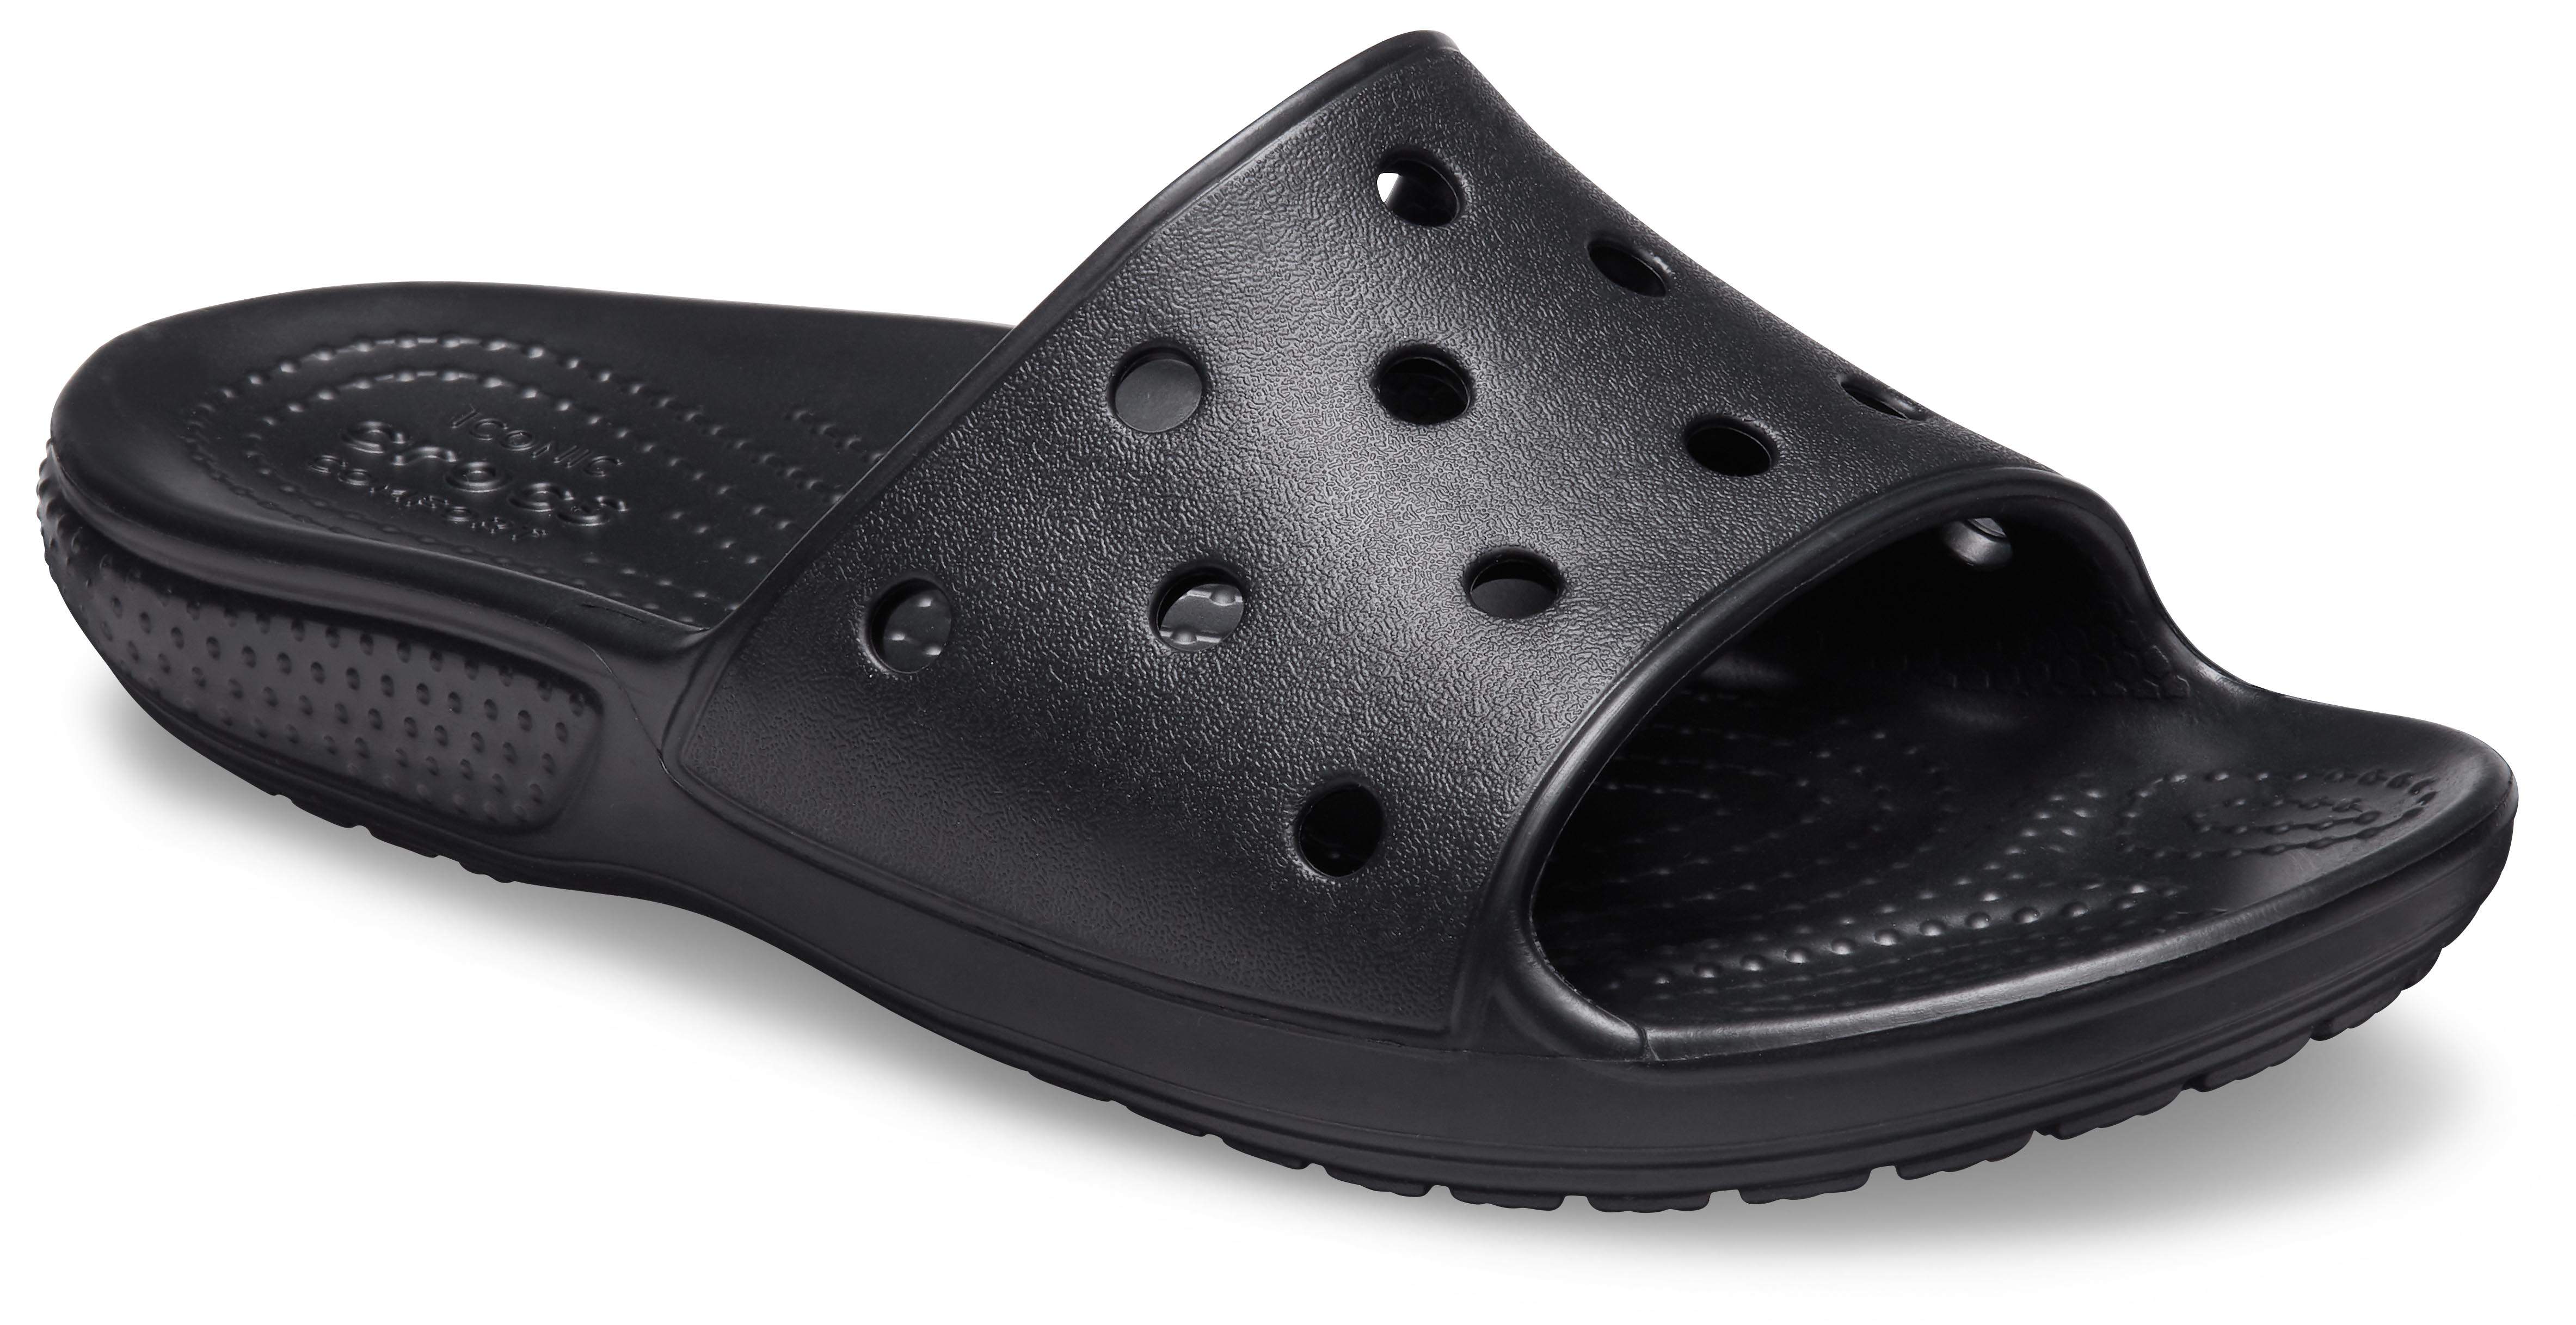 black crocs kids